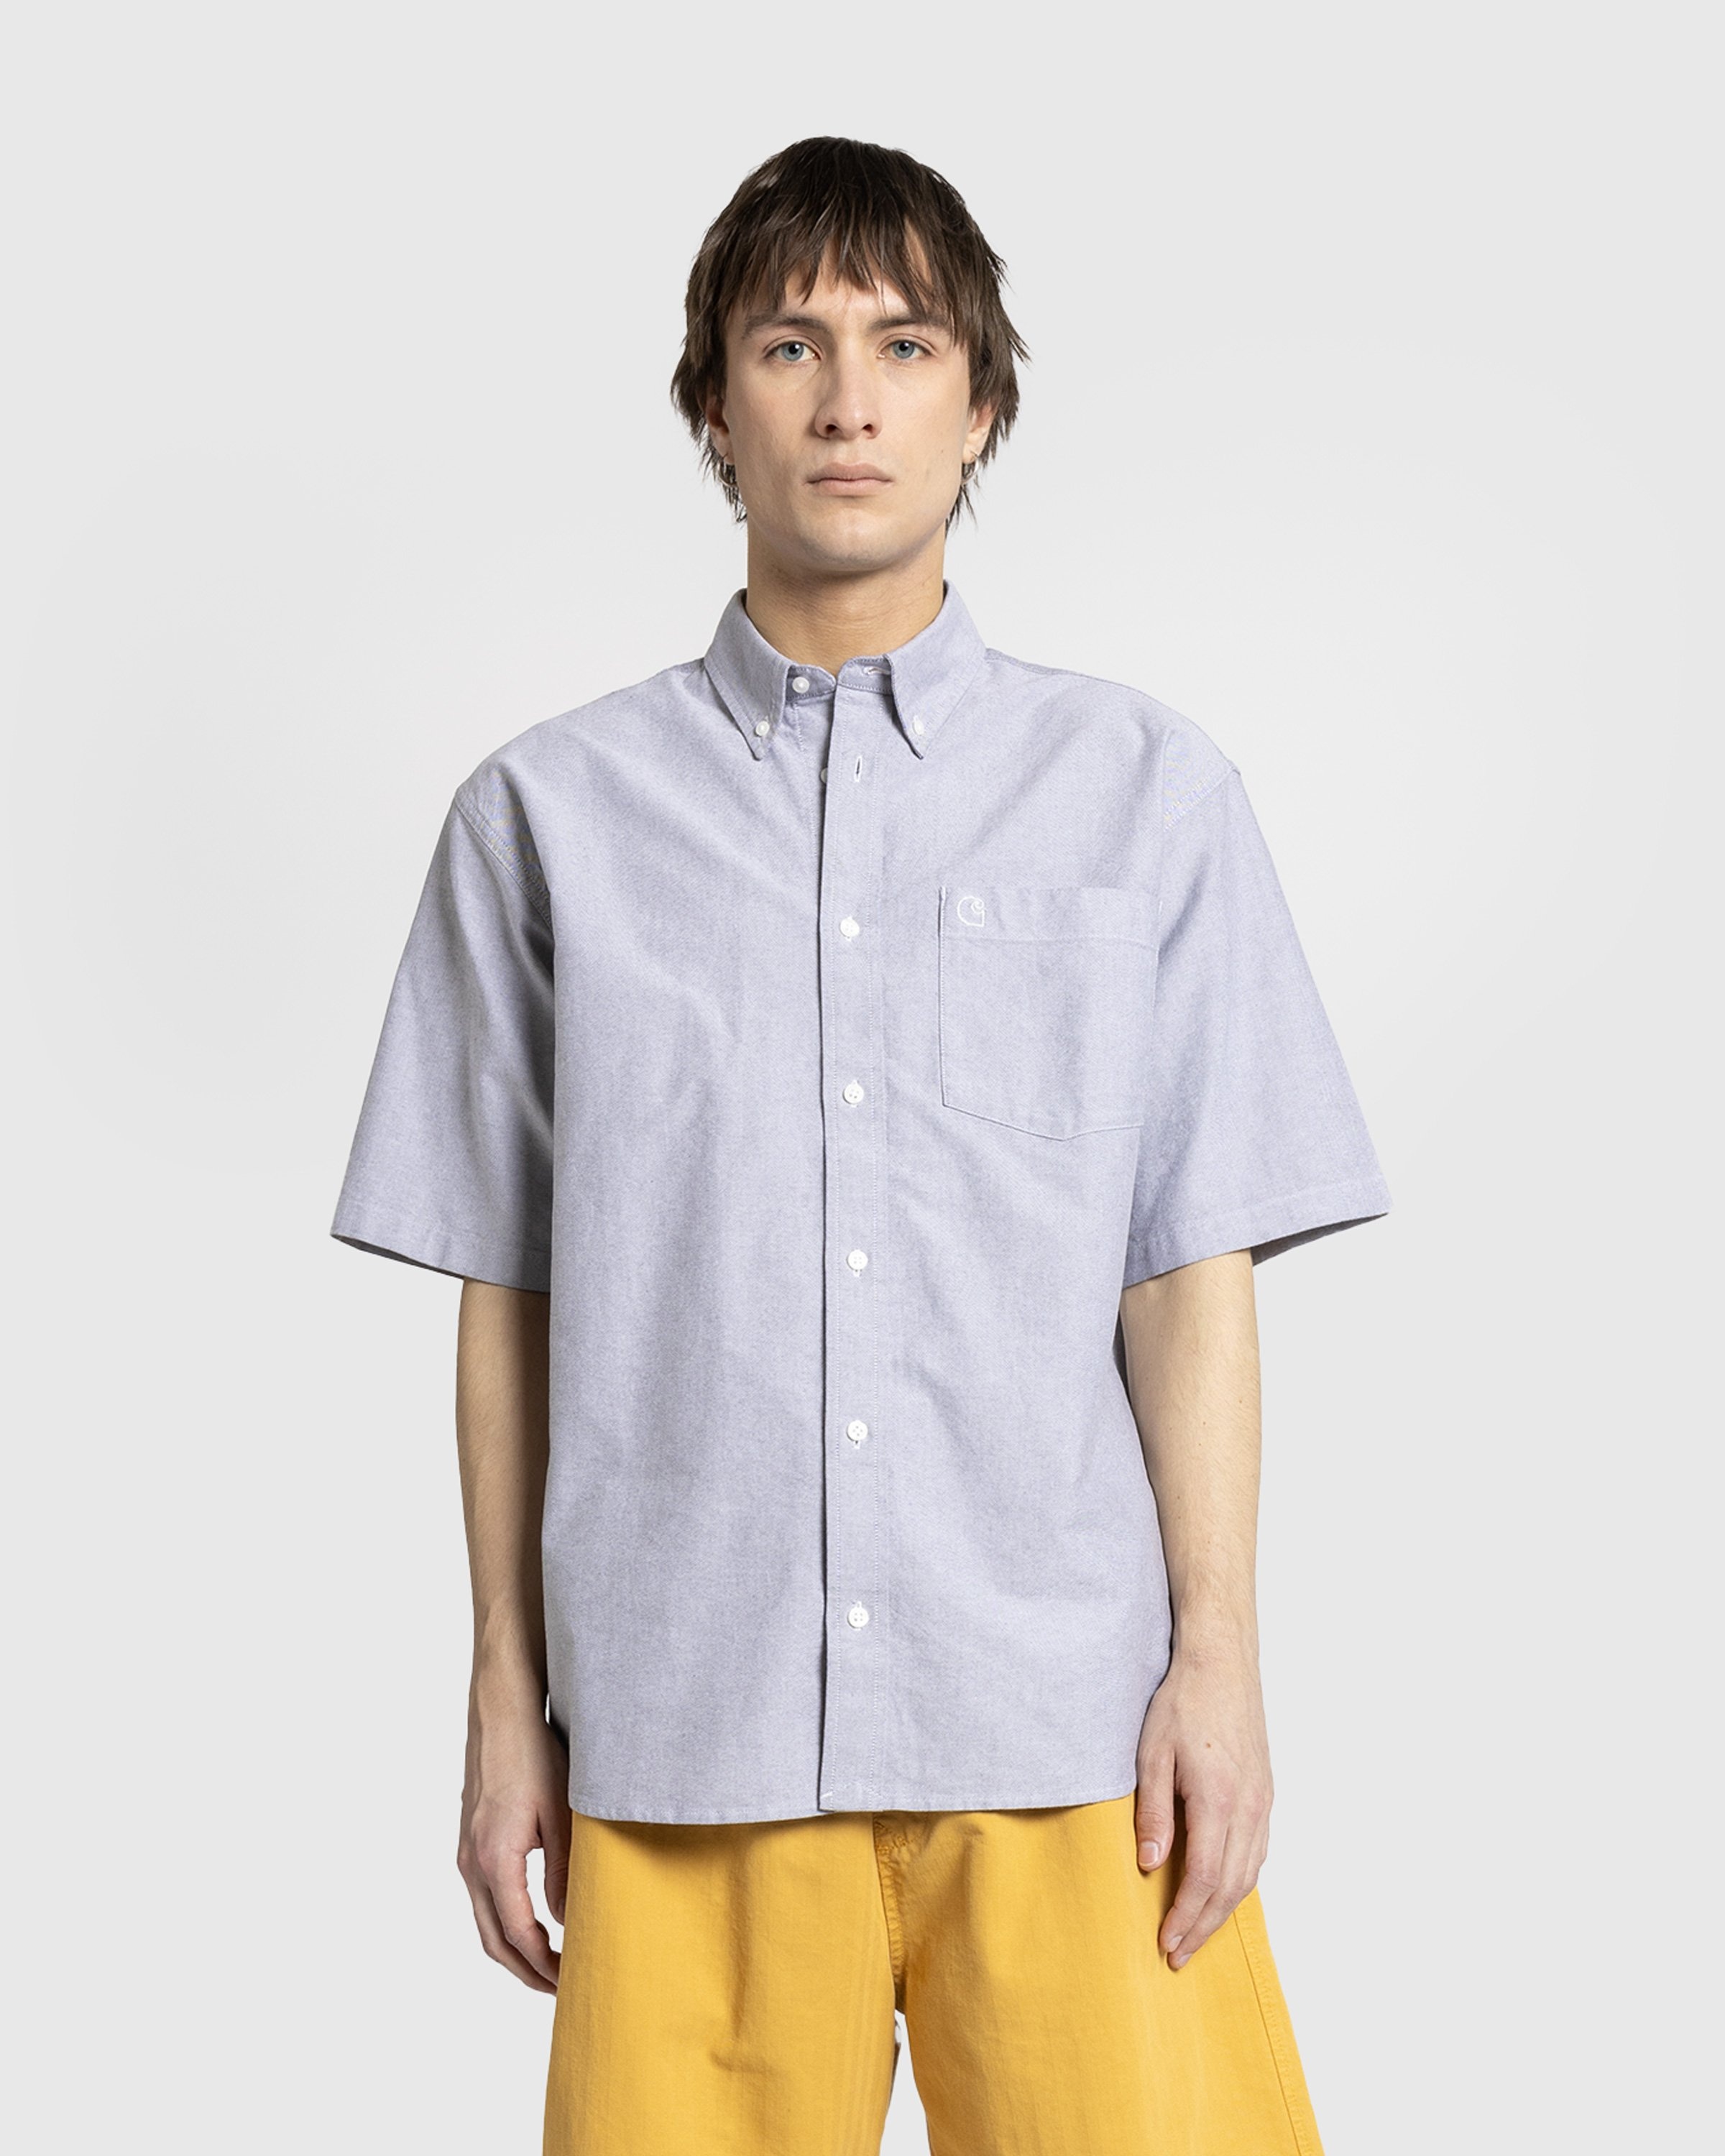 Carhartt WIP – S/S Braxton Shirt Charcoal/Wax - 2